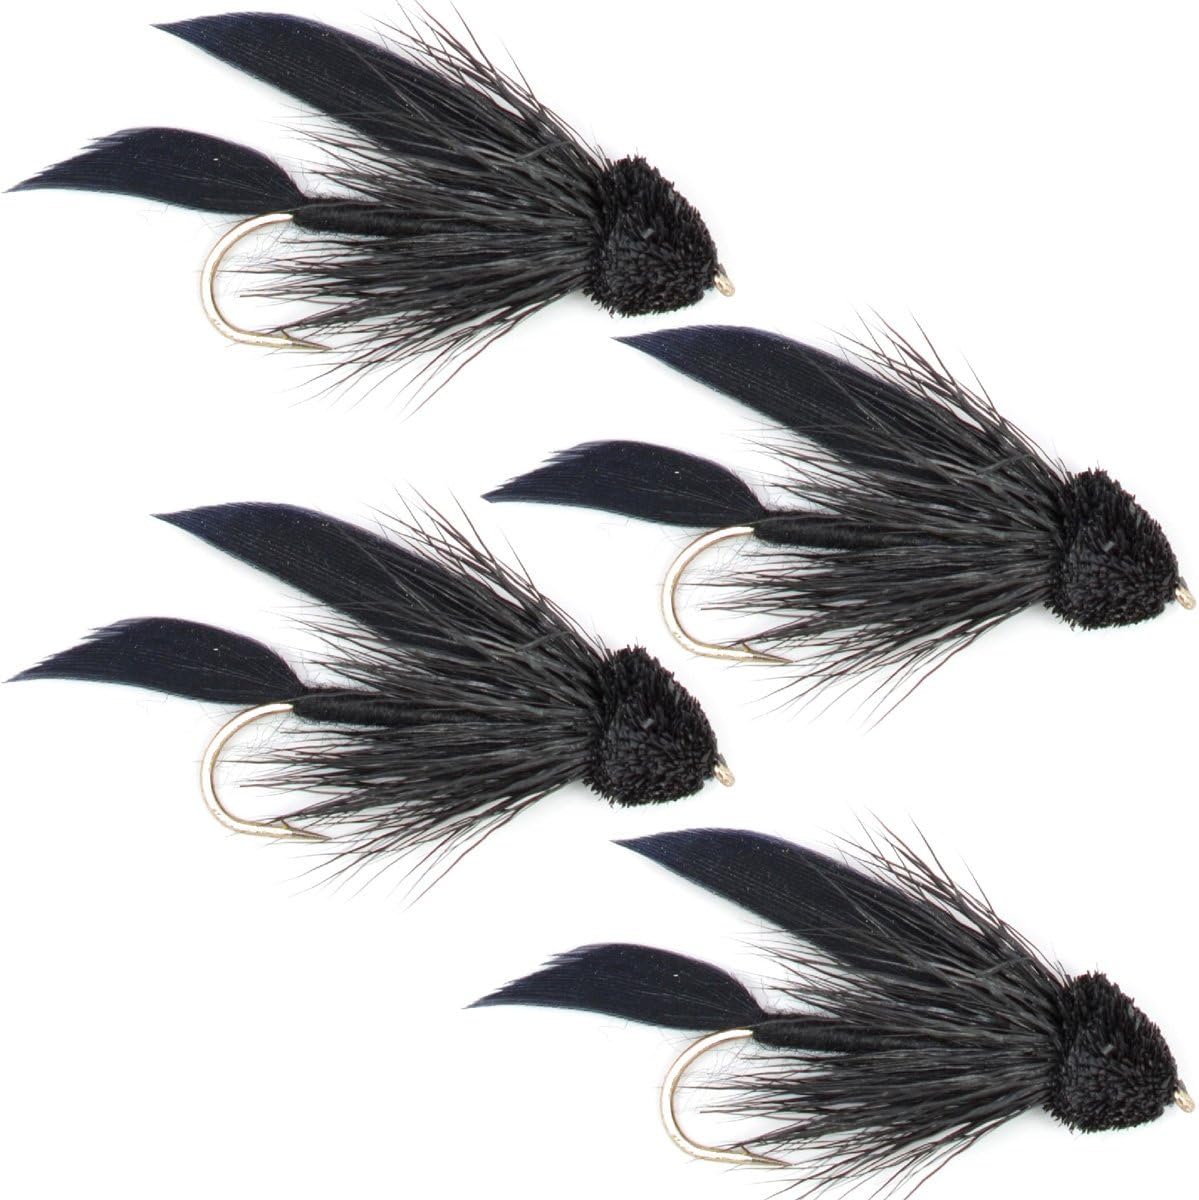 Moscas de pesca con mosca Black Muddler Minnow, serpentinas clásicas, juego de 4 anzuelos para moscas, tamaño 8 